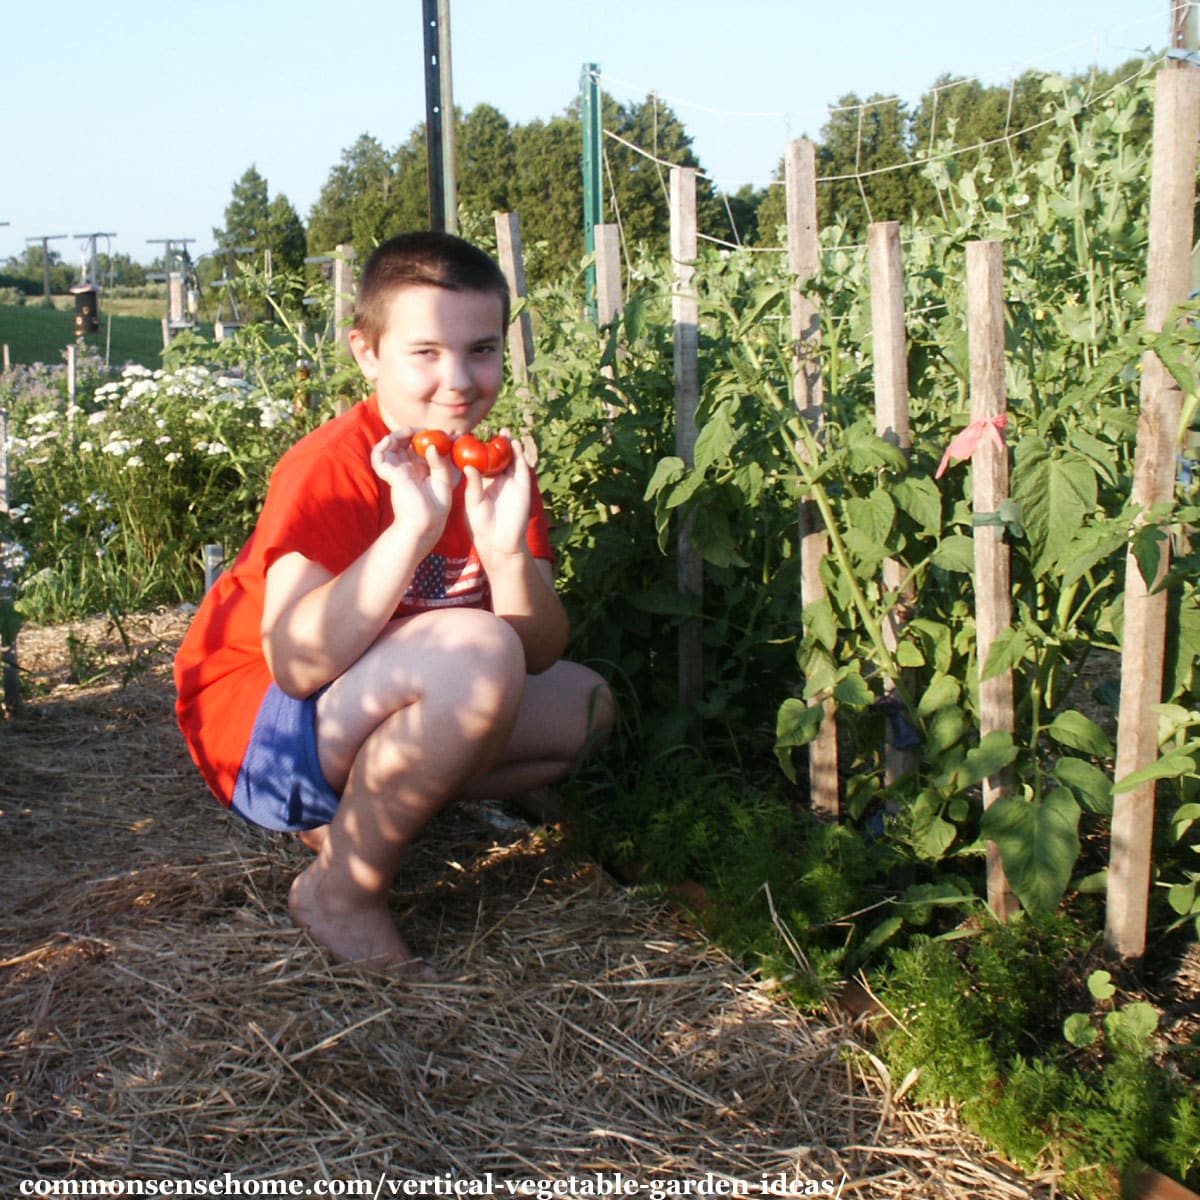 boy next to vertical vegetable garden plantings